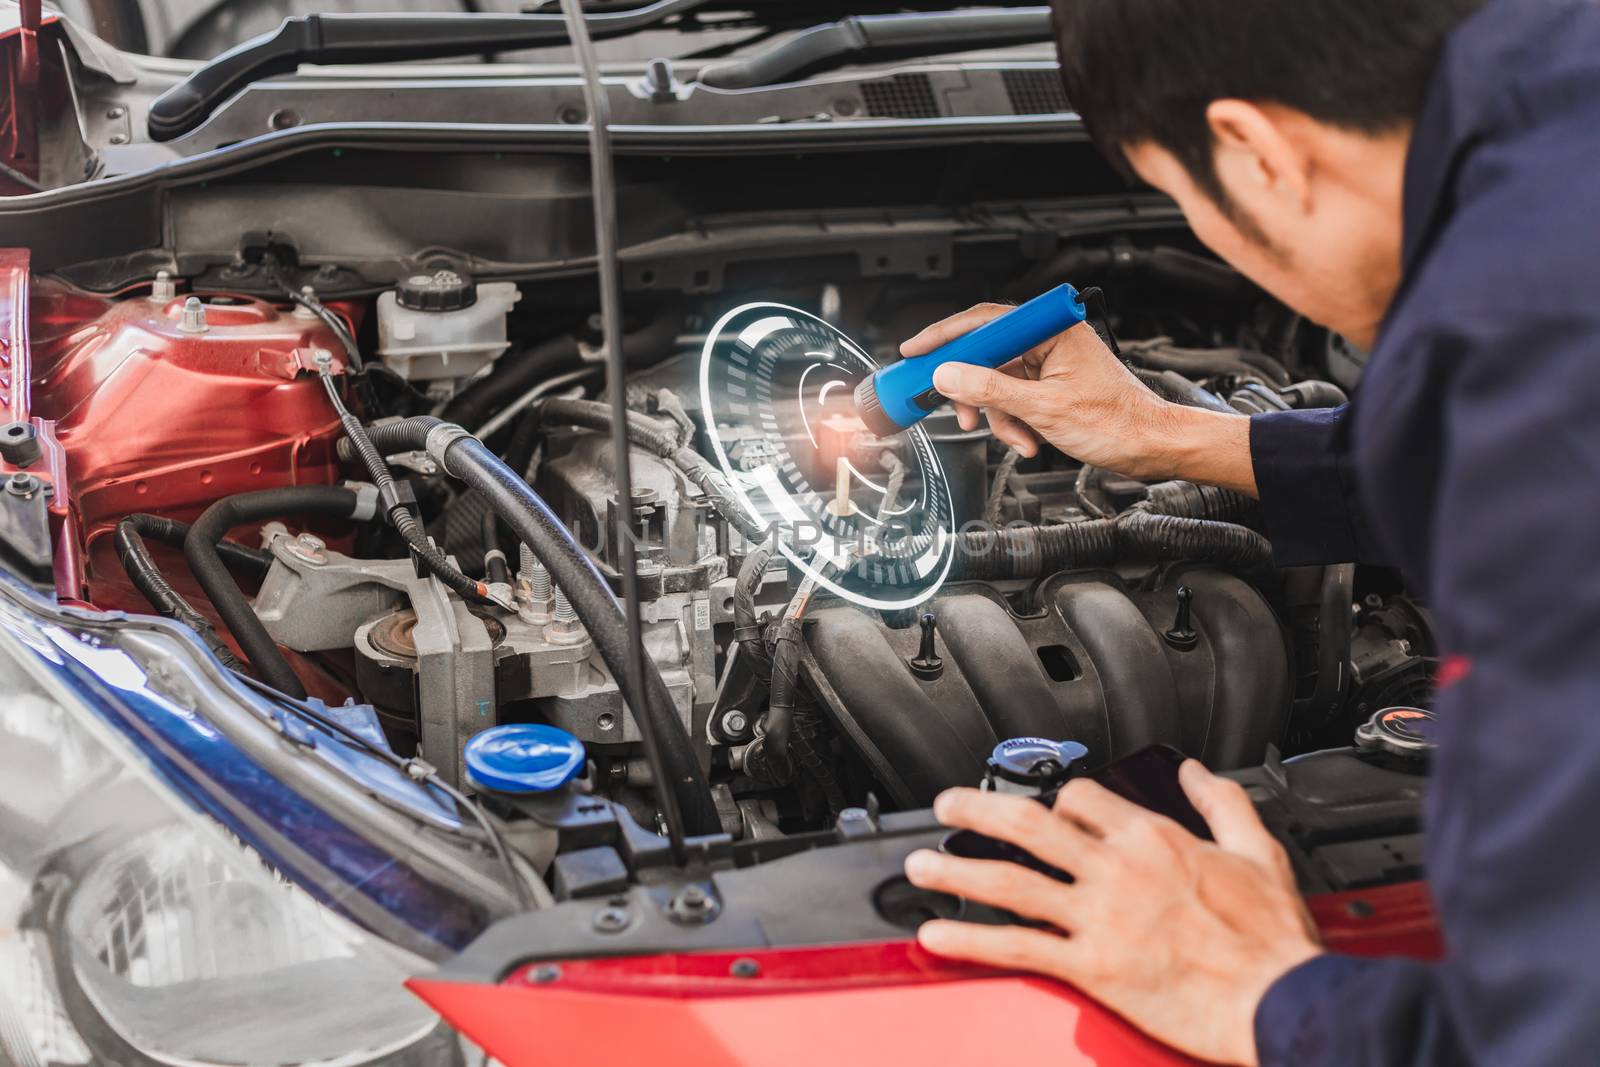 Asian Man mechanic inspection Shine a torch car engine checking  by oatzpenzstudio